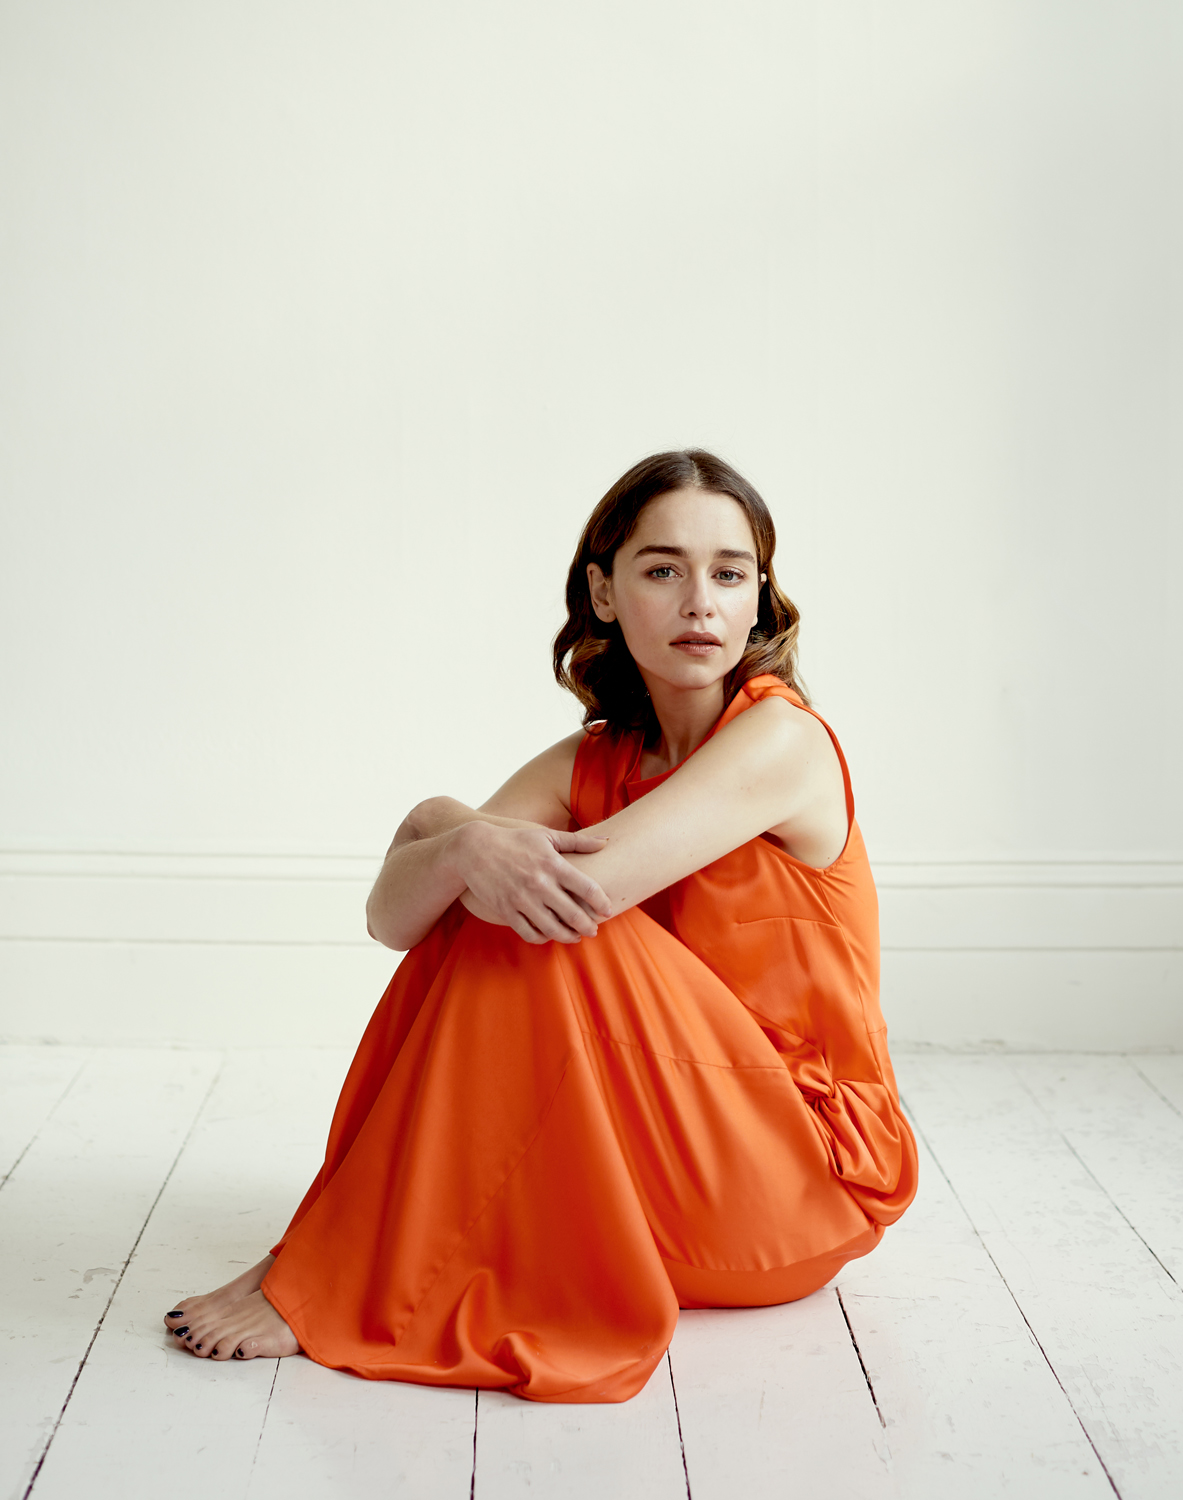 Emilia Clarke 2019 Photoshoot Wallpapers